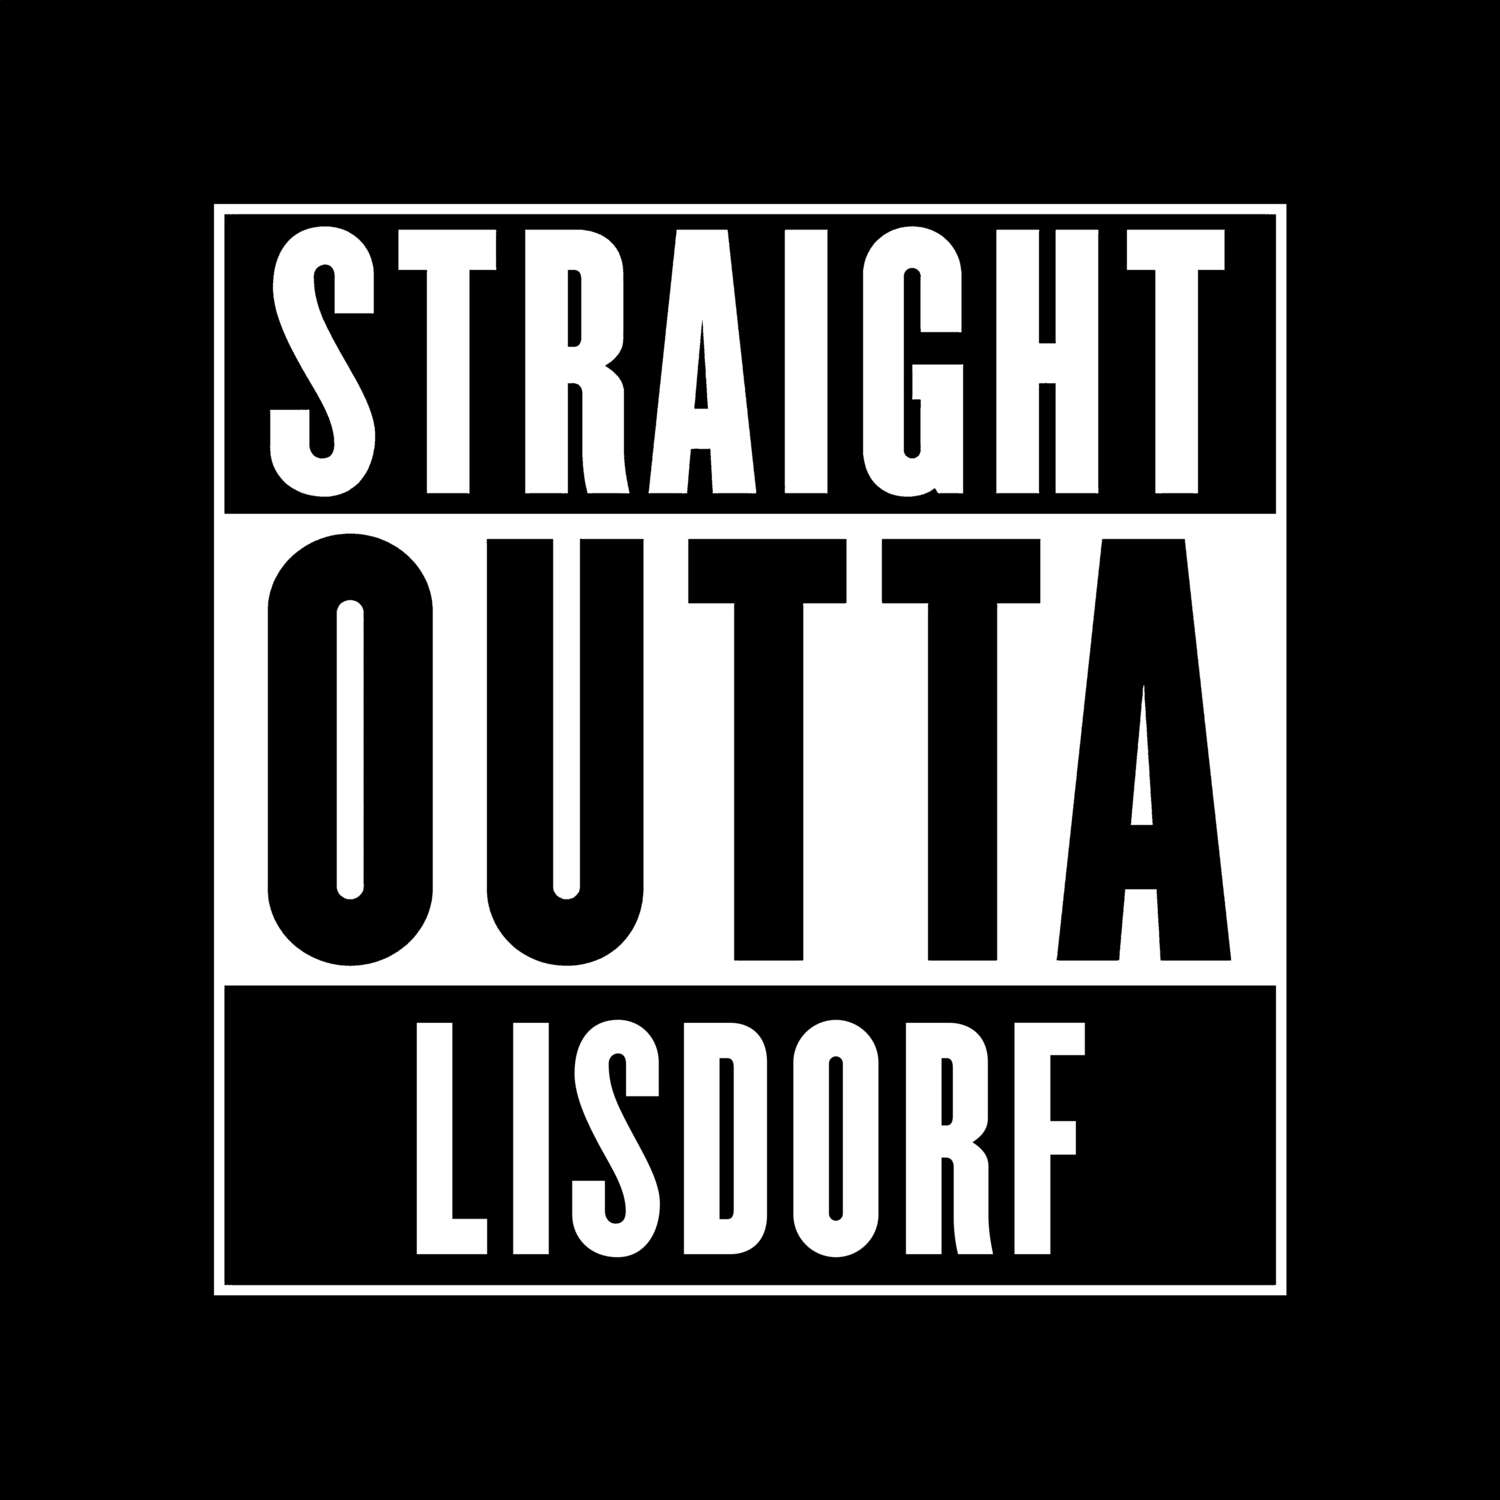 Lisdorf T-Shirt »Straight Outta«